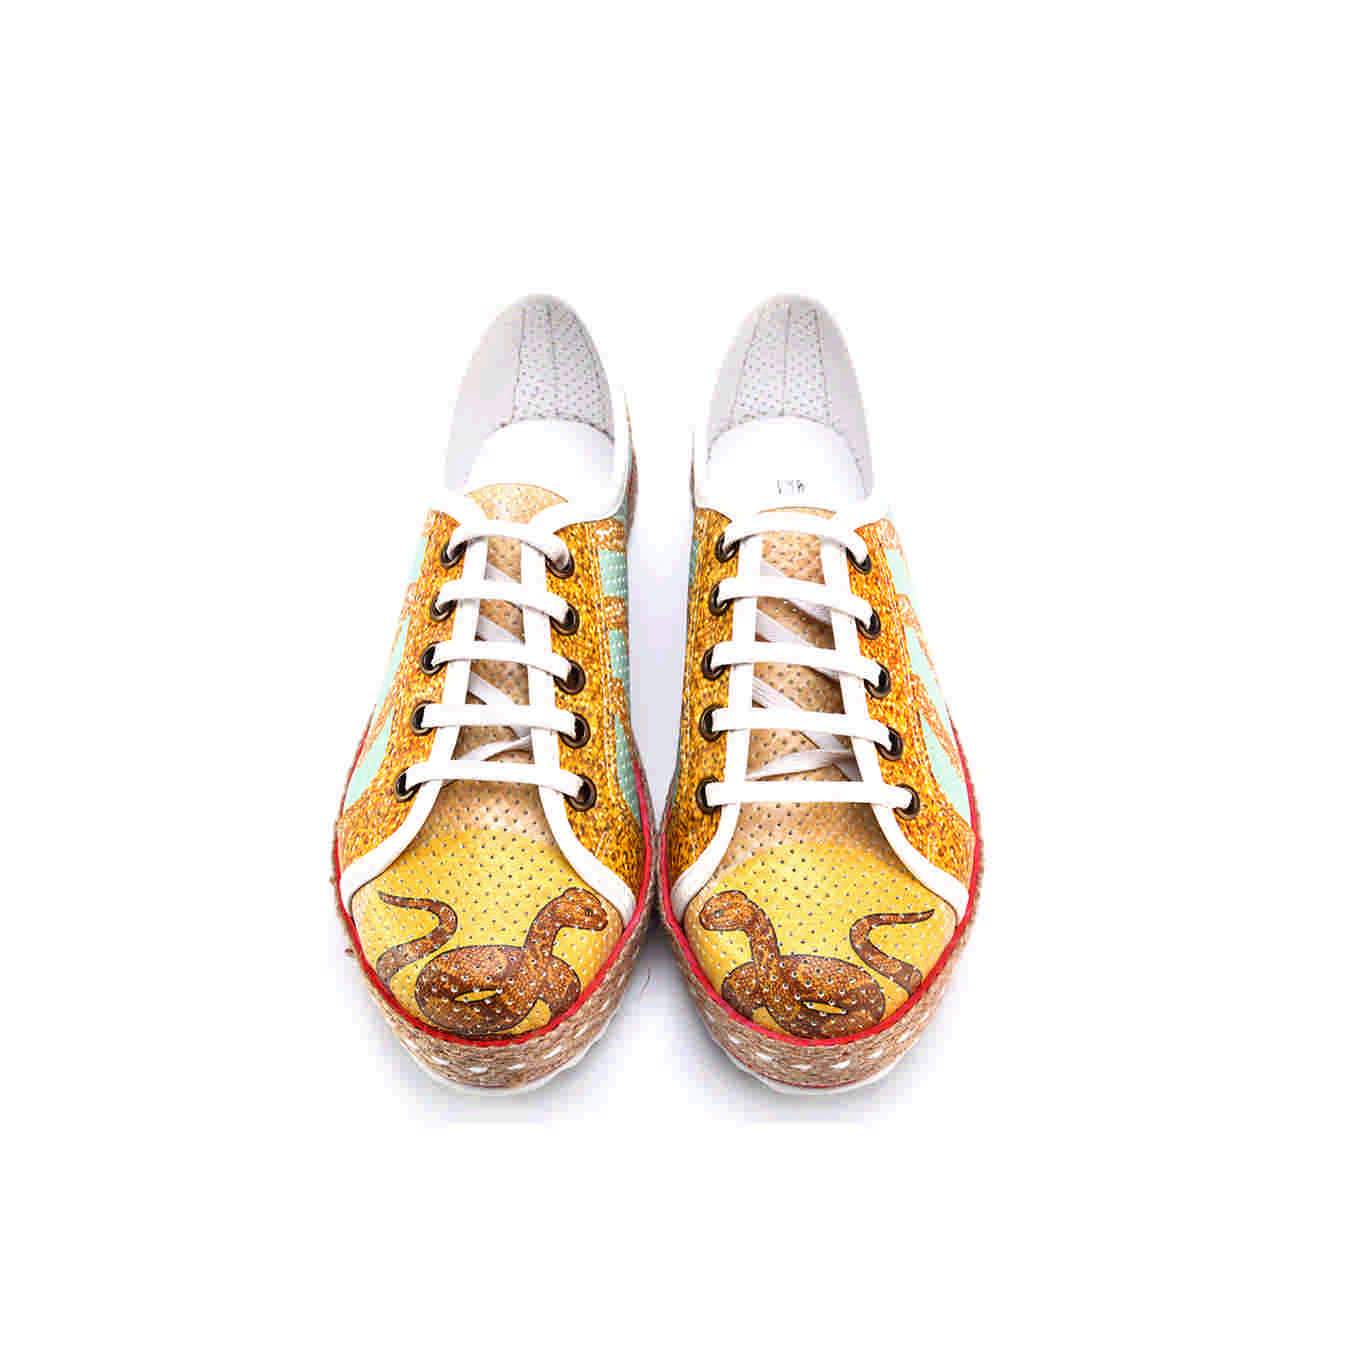 Sneakers Shoes NDEL110 (1891146072160)